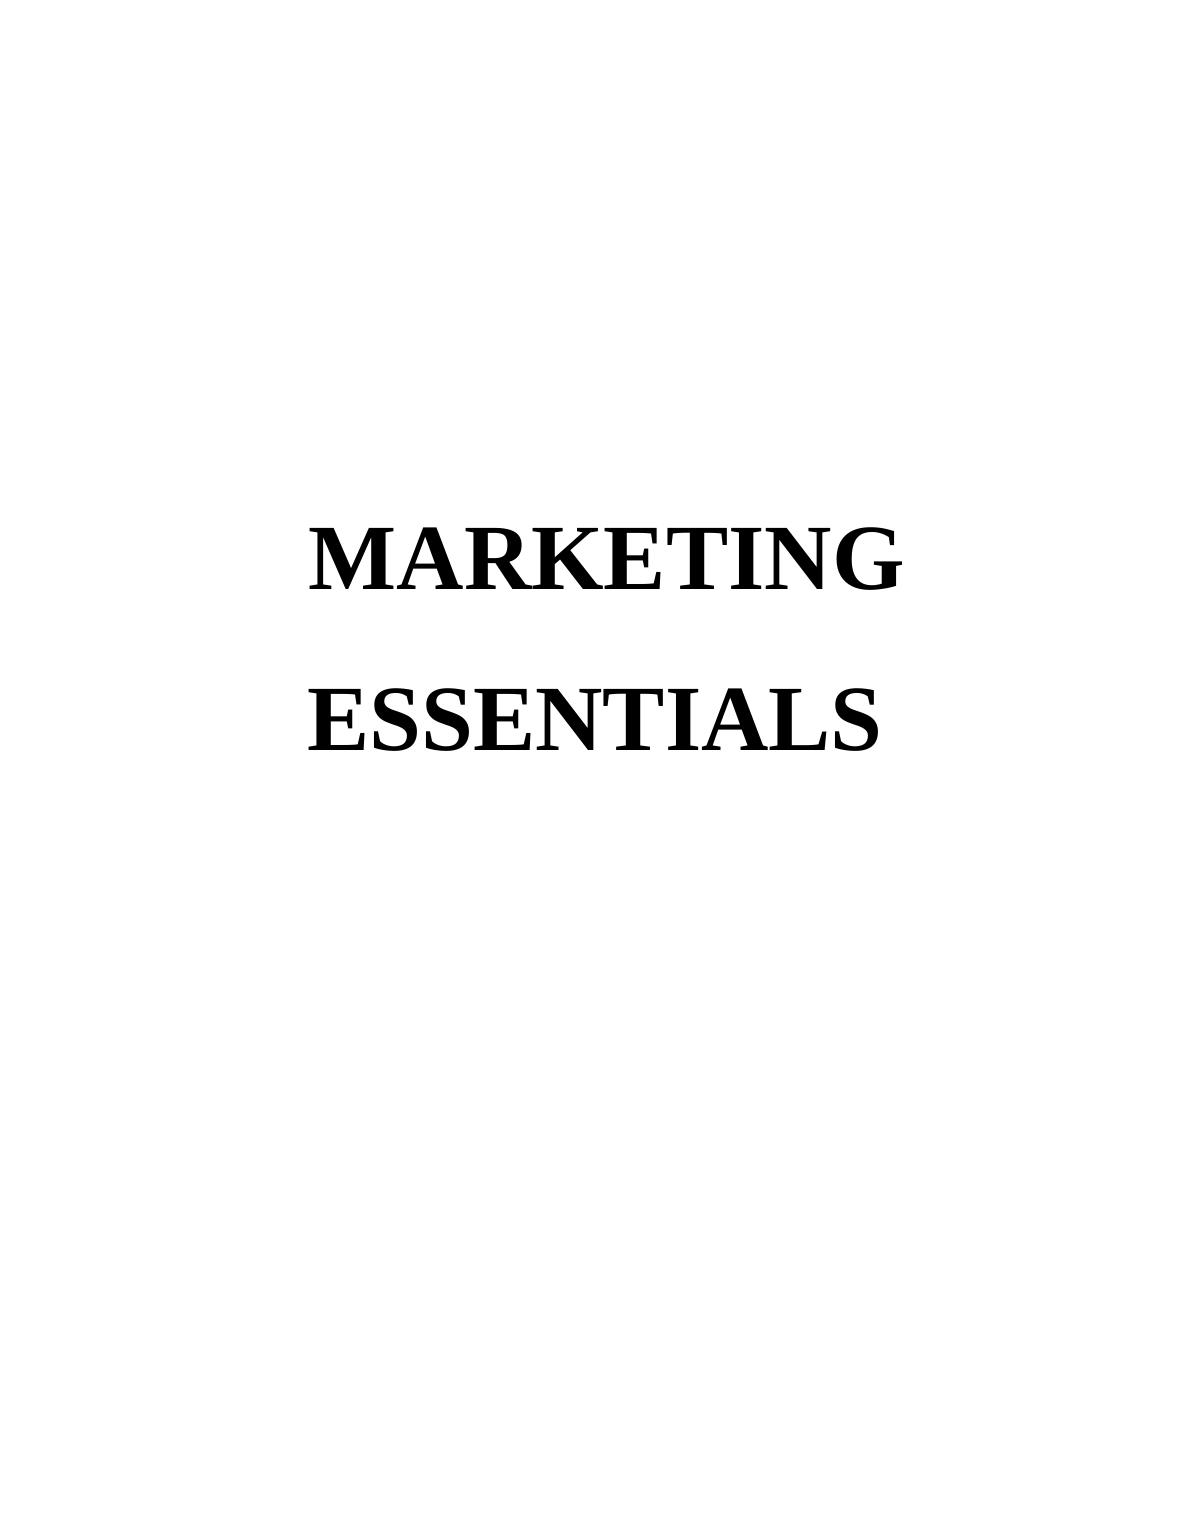 Marketing Essentials- Marks and Spencer_1